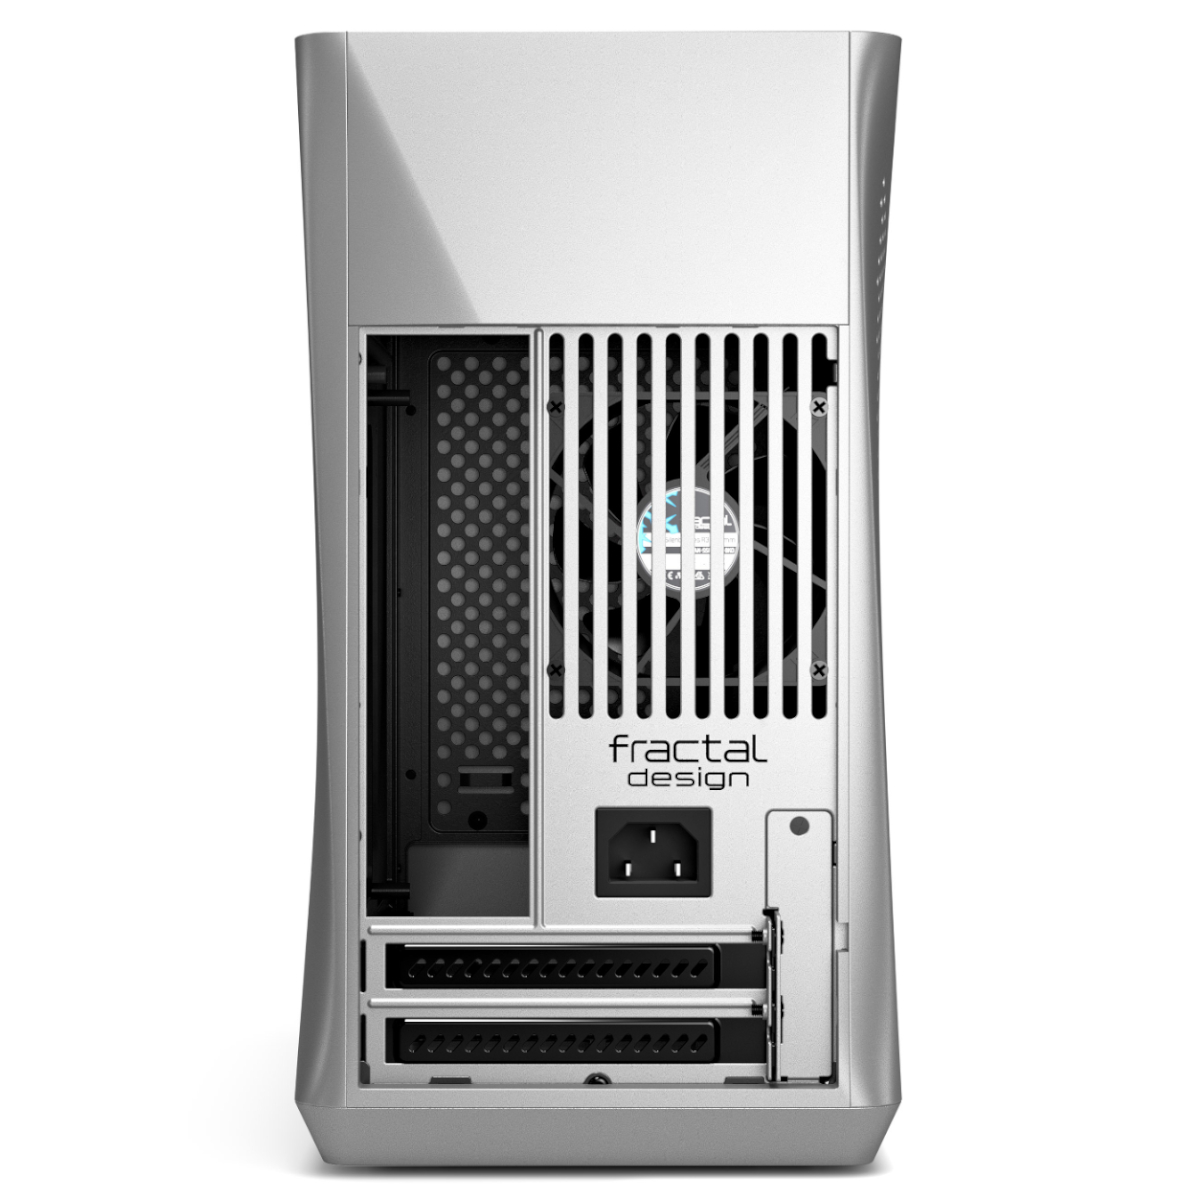 Fractal Design - B Grade Fractal Design Era Mini-ITX Case - Silver & White Oak